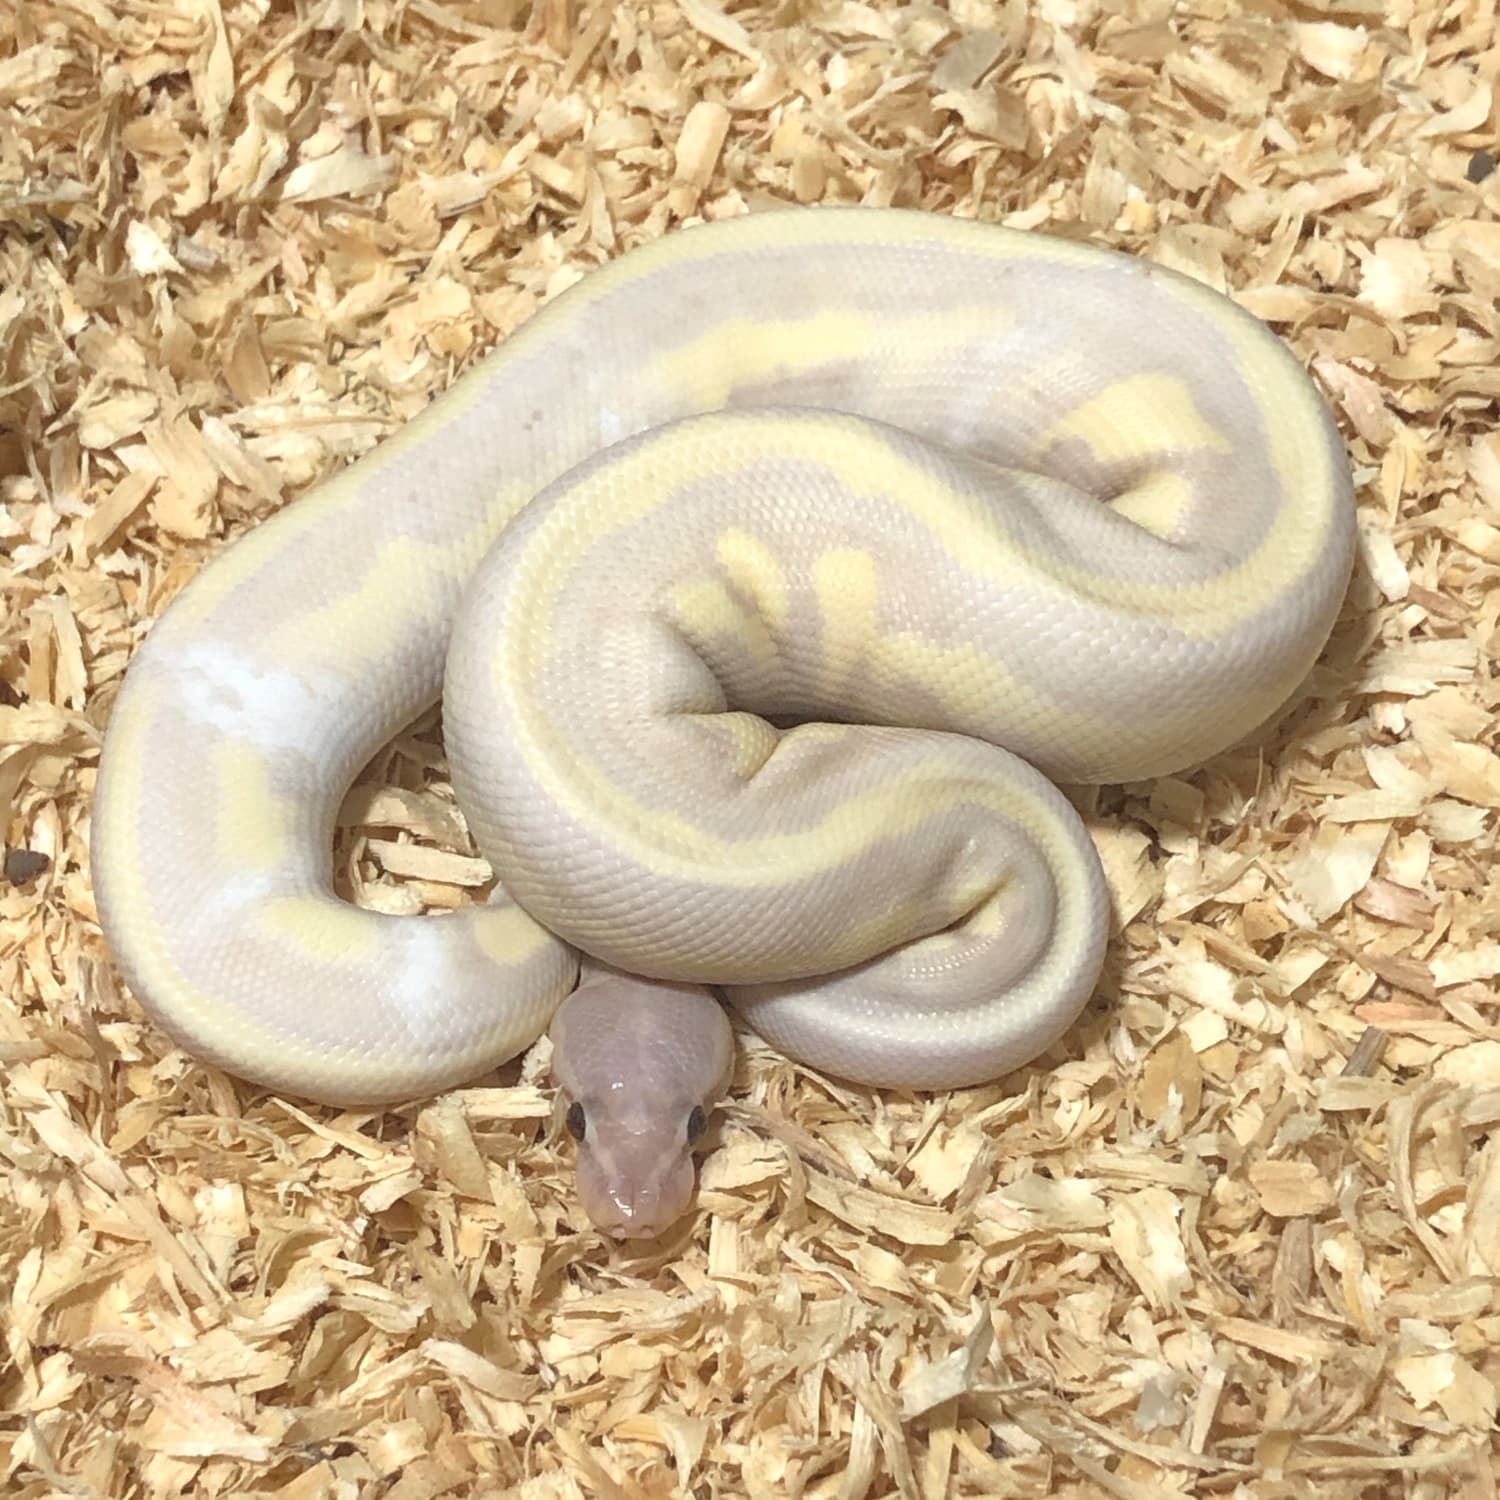 Super Banana Desert Ghost Pied Ball Python by Fireball Reptiles